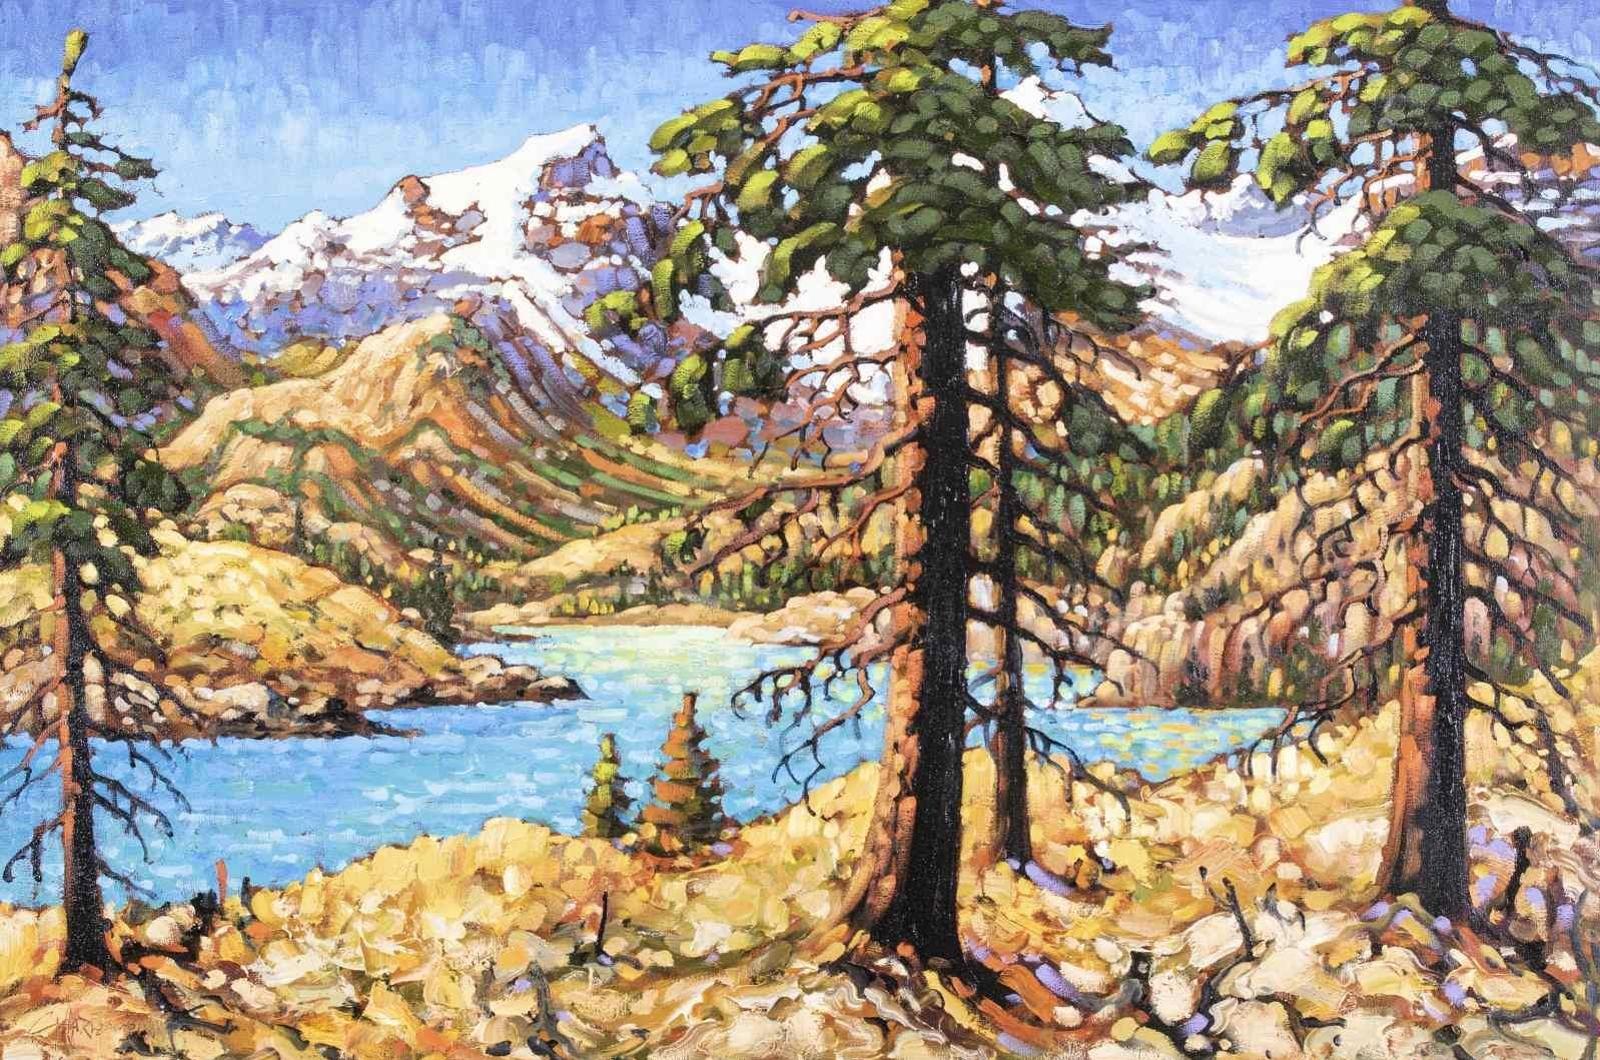 Rod Charlesworth (1955) - Rocky Mountain Vista, Near Jasper